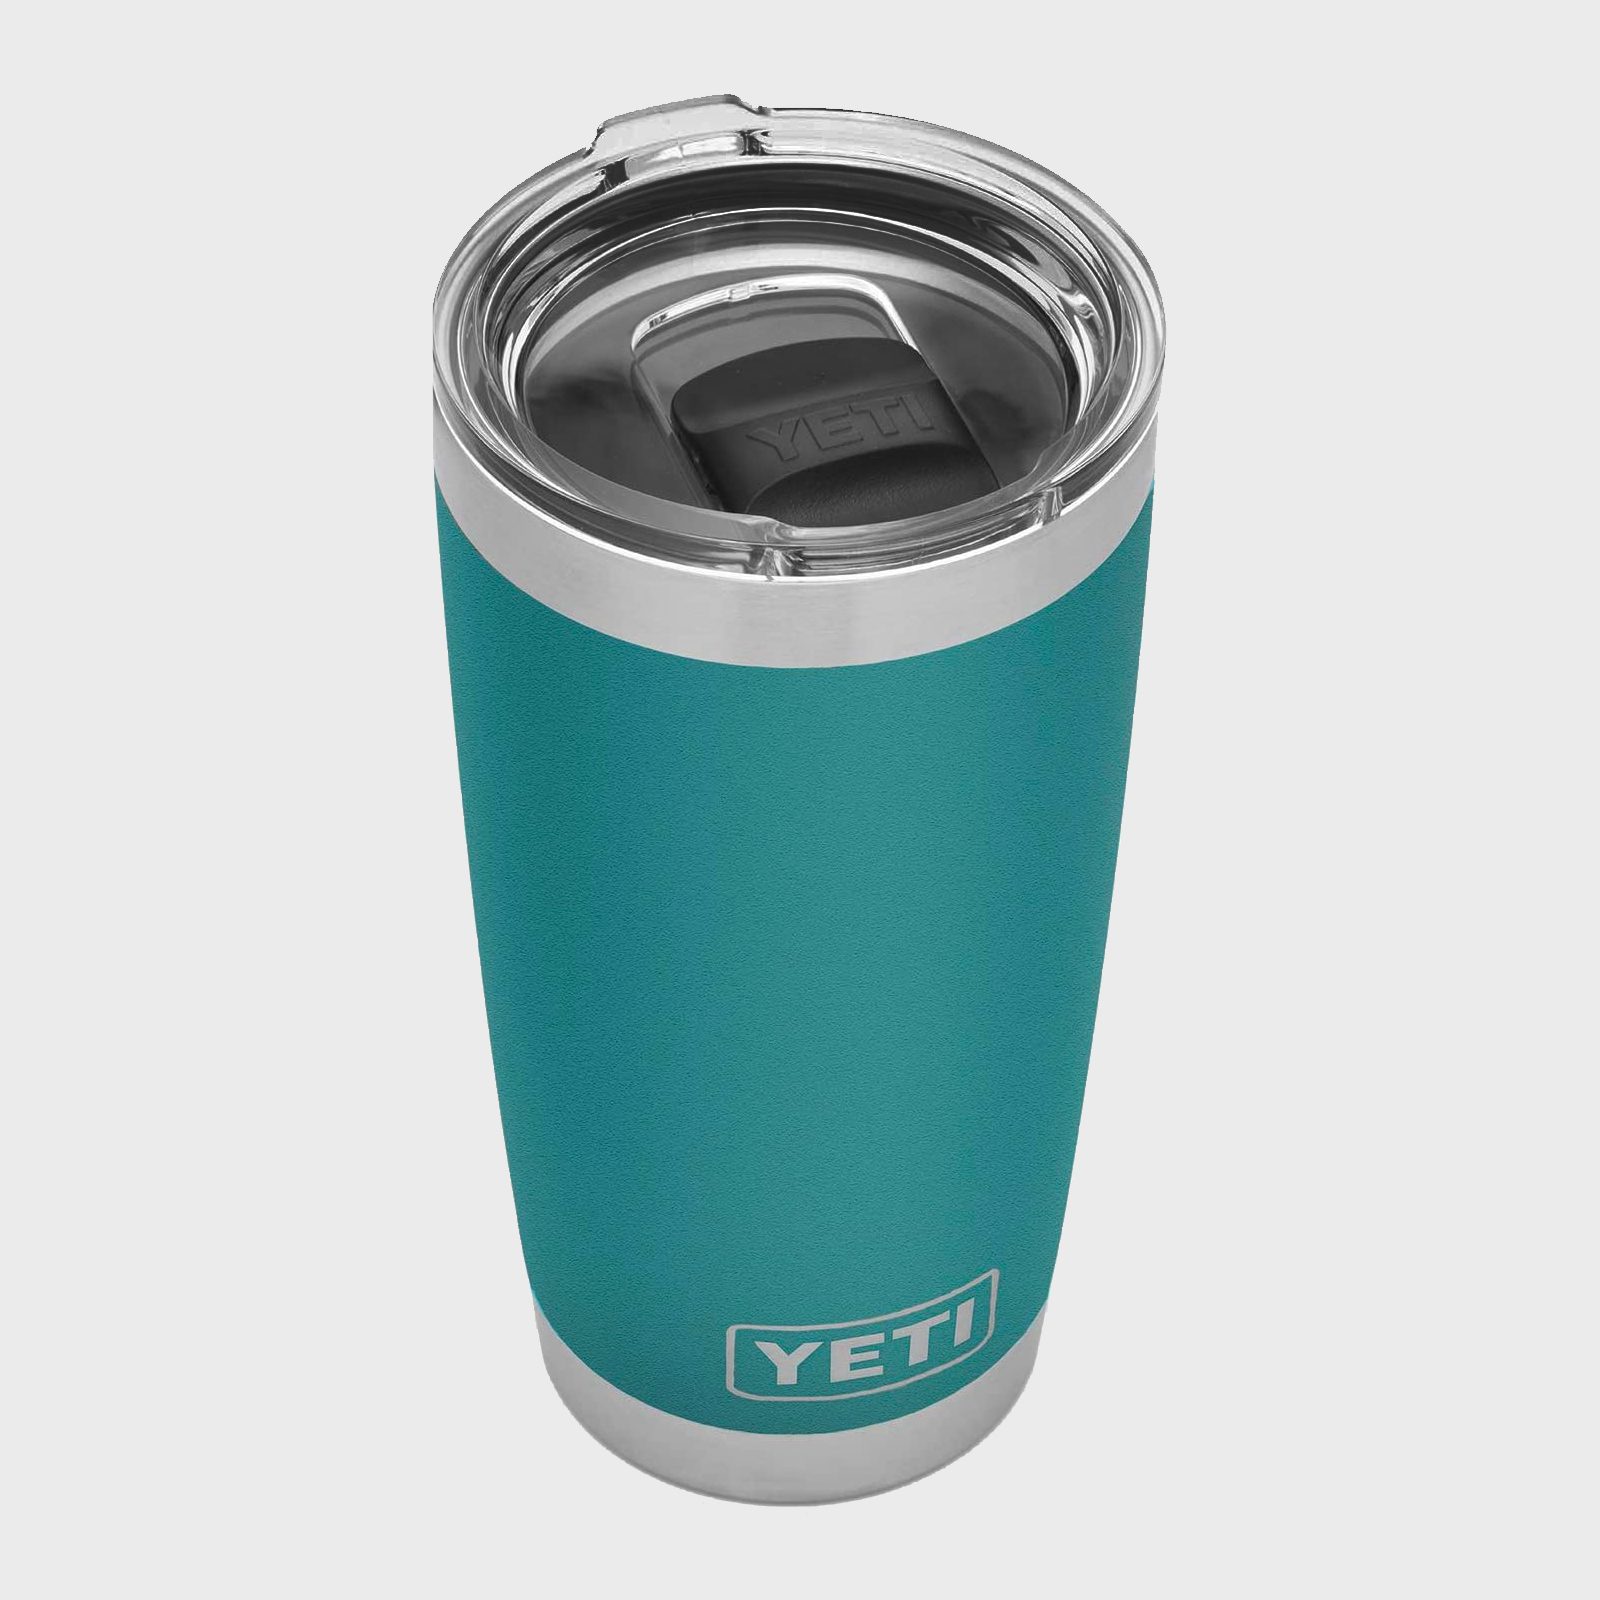 https://www.rd.com/wp-content/uploads/2022/05/RD-15-Best-Reusable-Coffee-Cups-Ecomm-Yeti-Rambler.jpg?fit=700%2C700